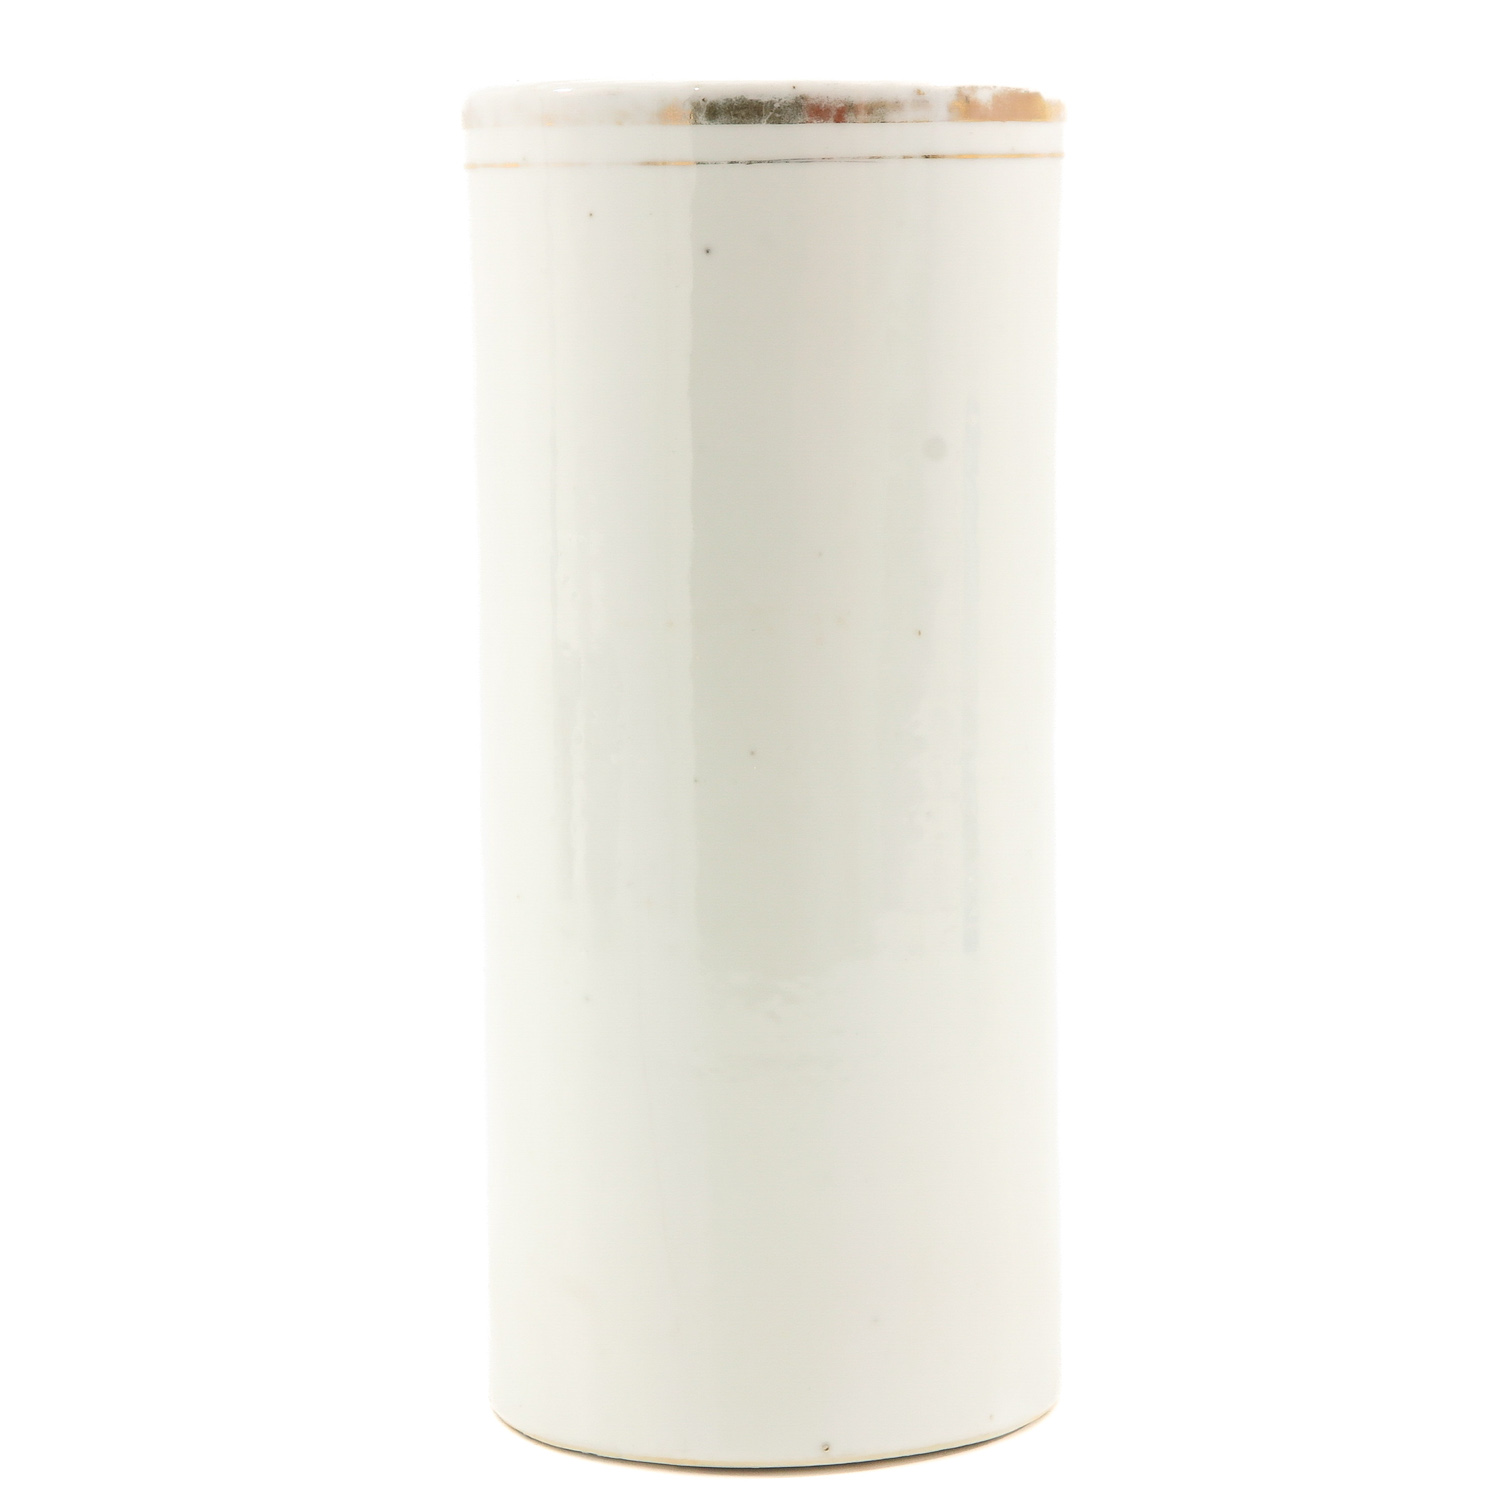 A Polychrome Decor Vase - Image 3 of 10